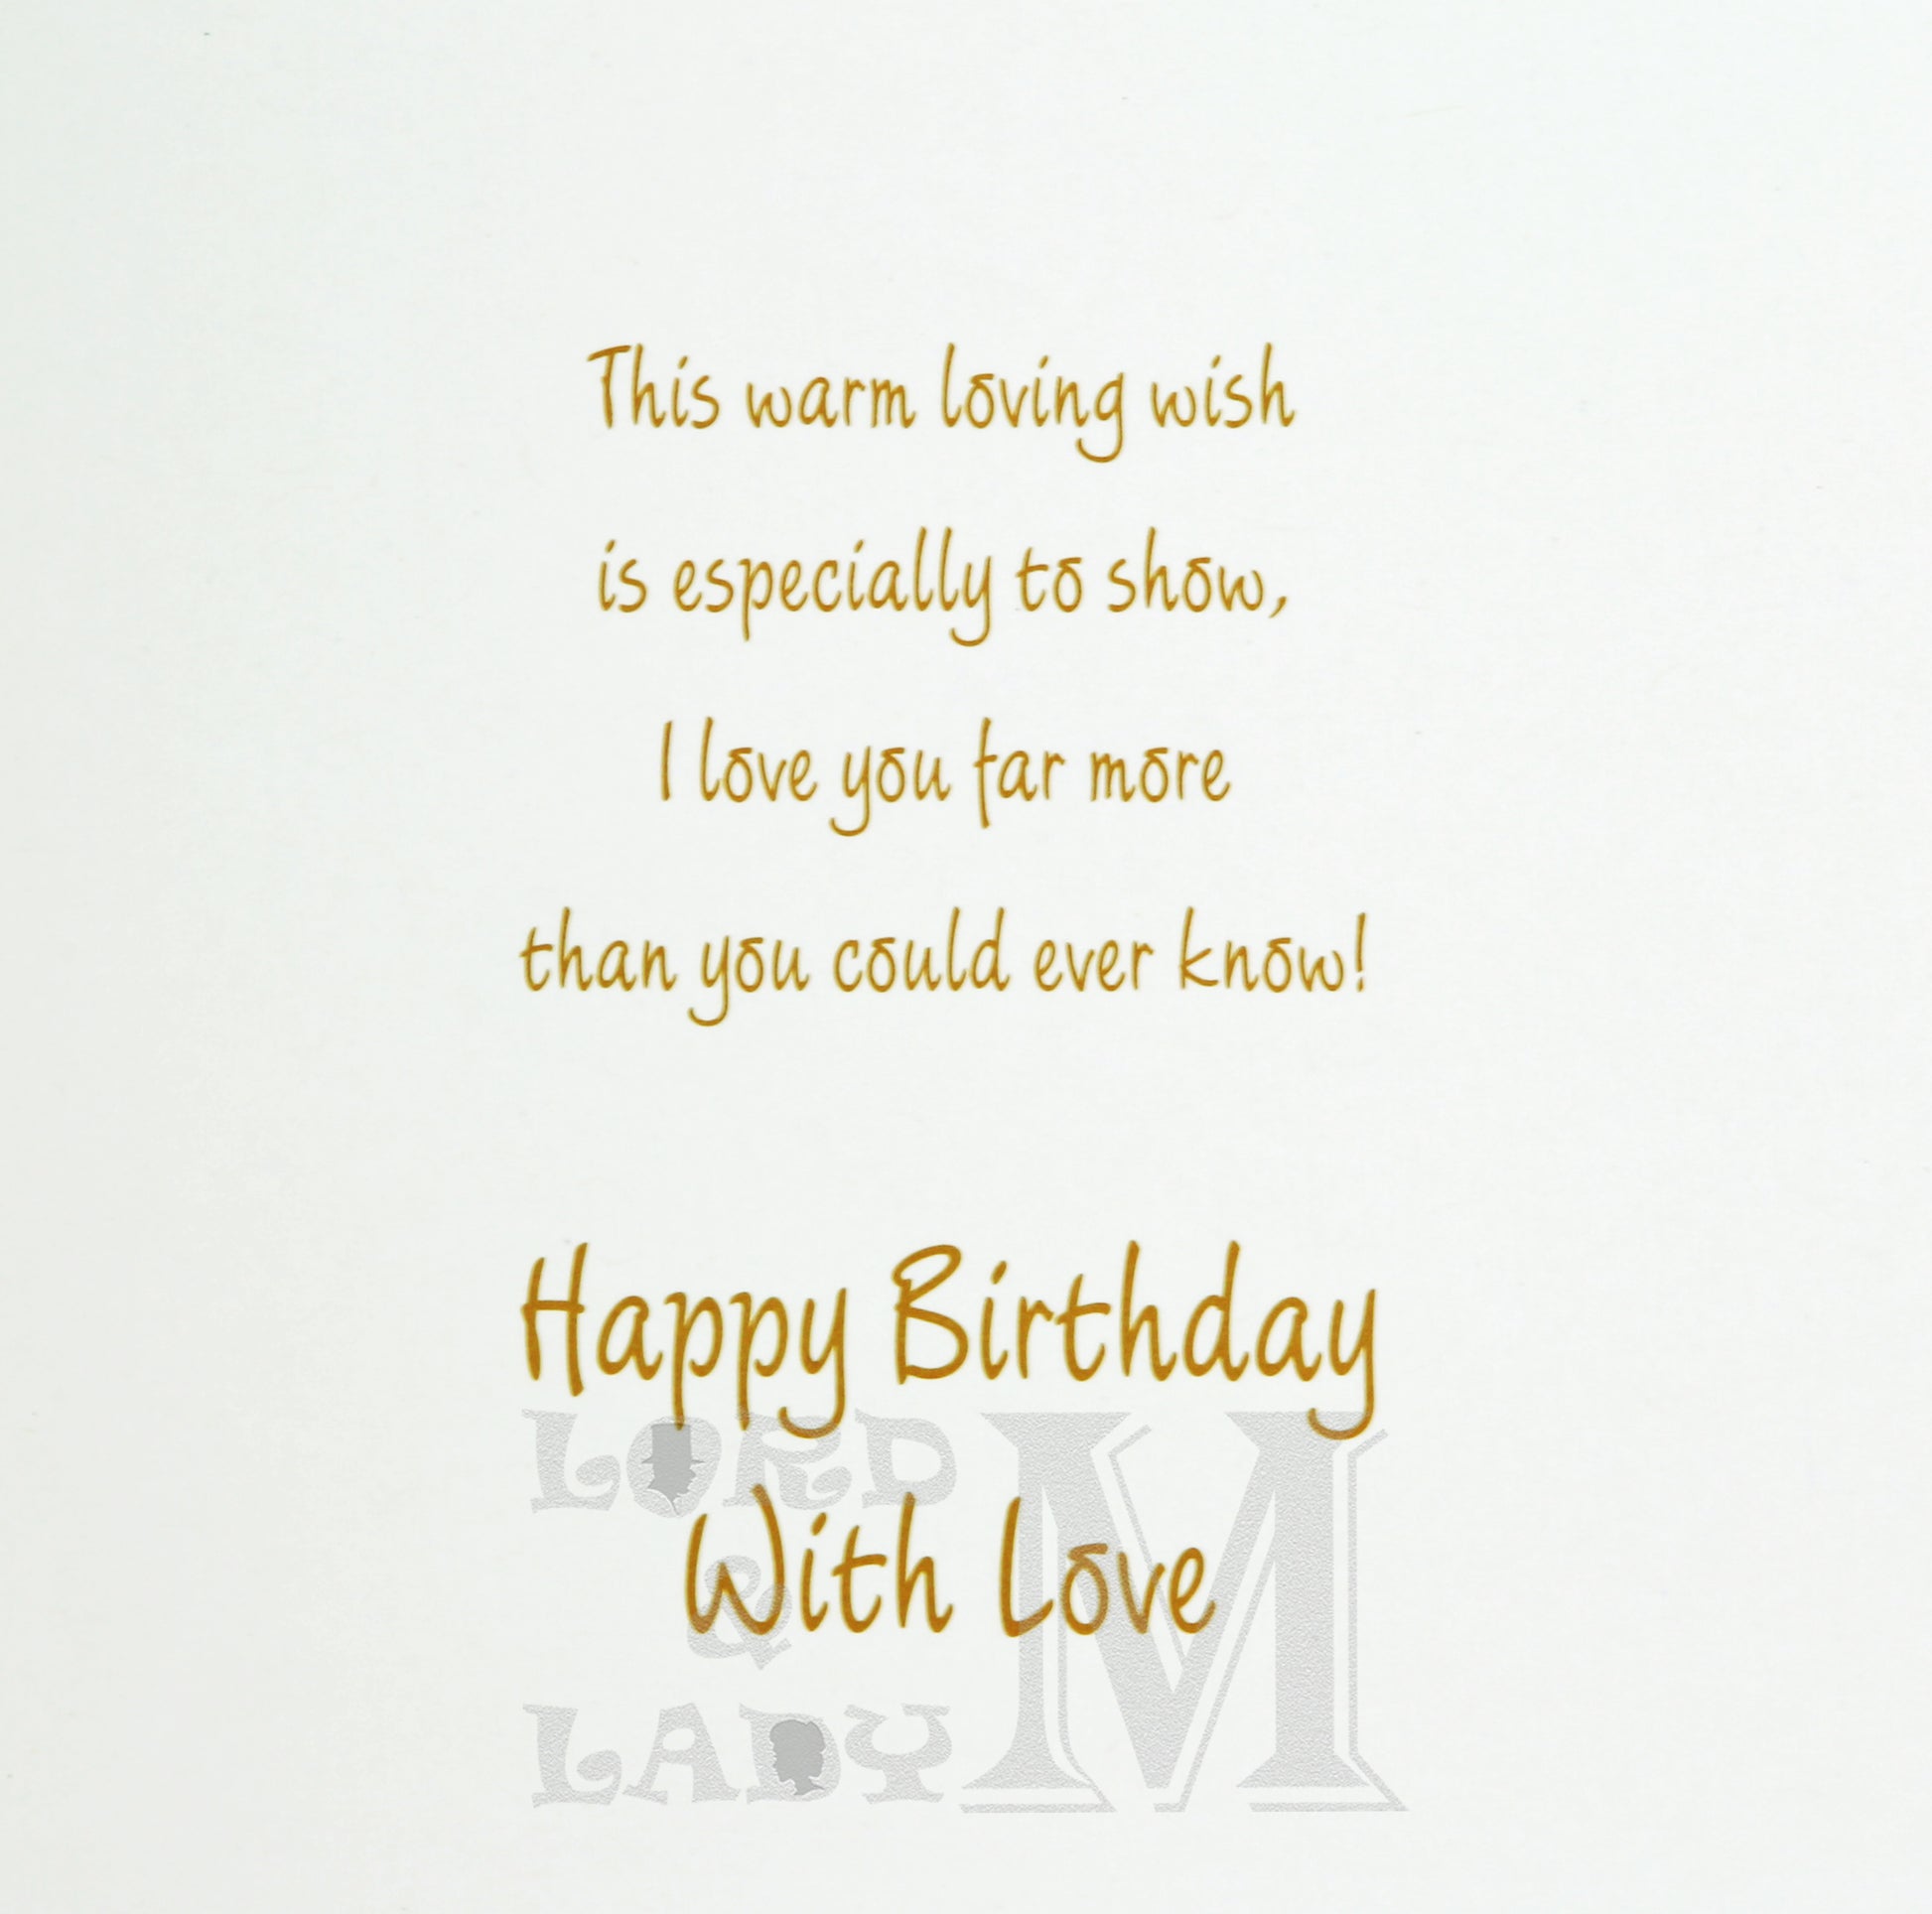 19cm - Birthday Wishes To My Dear Husband - BGC